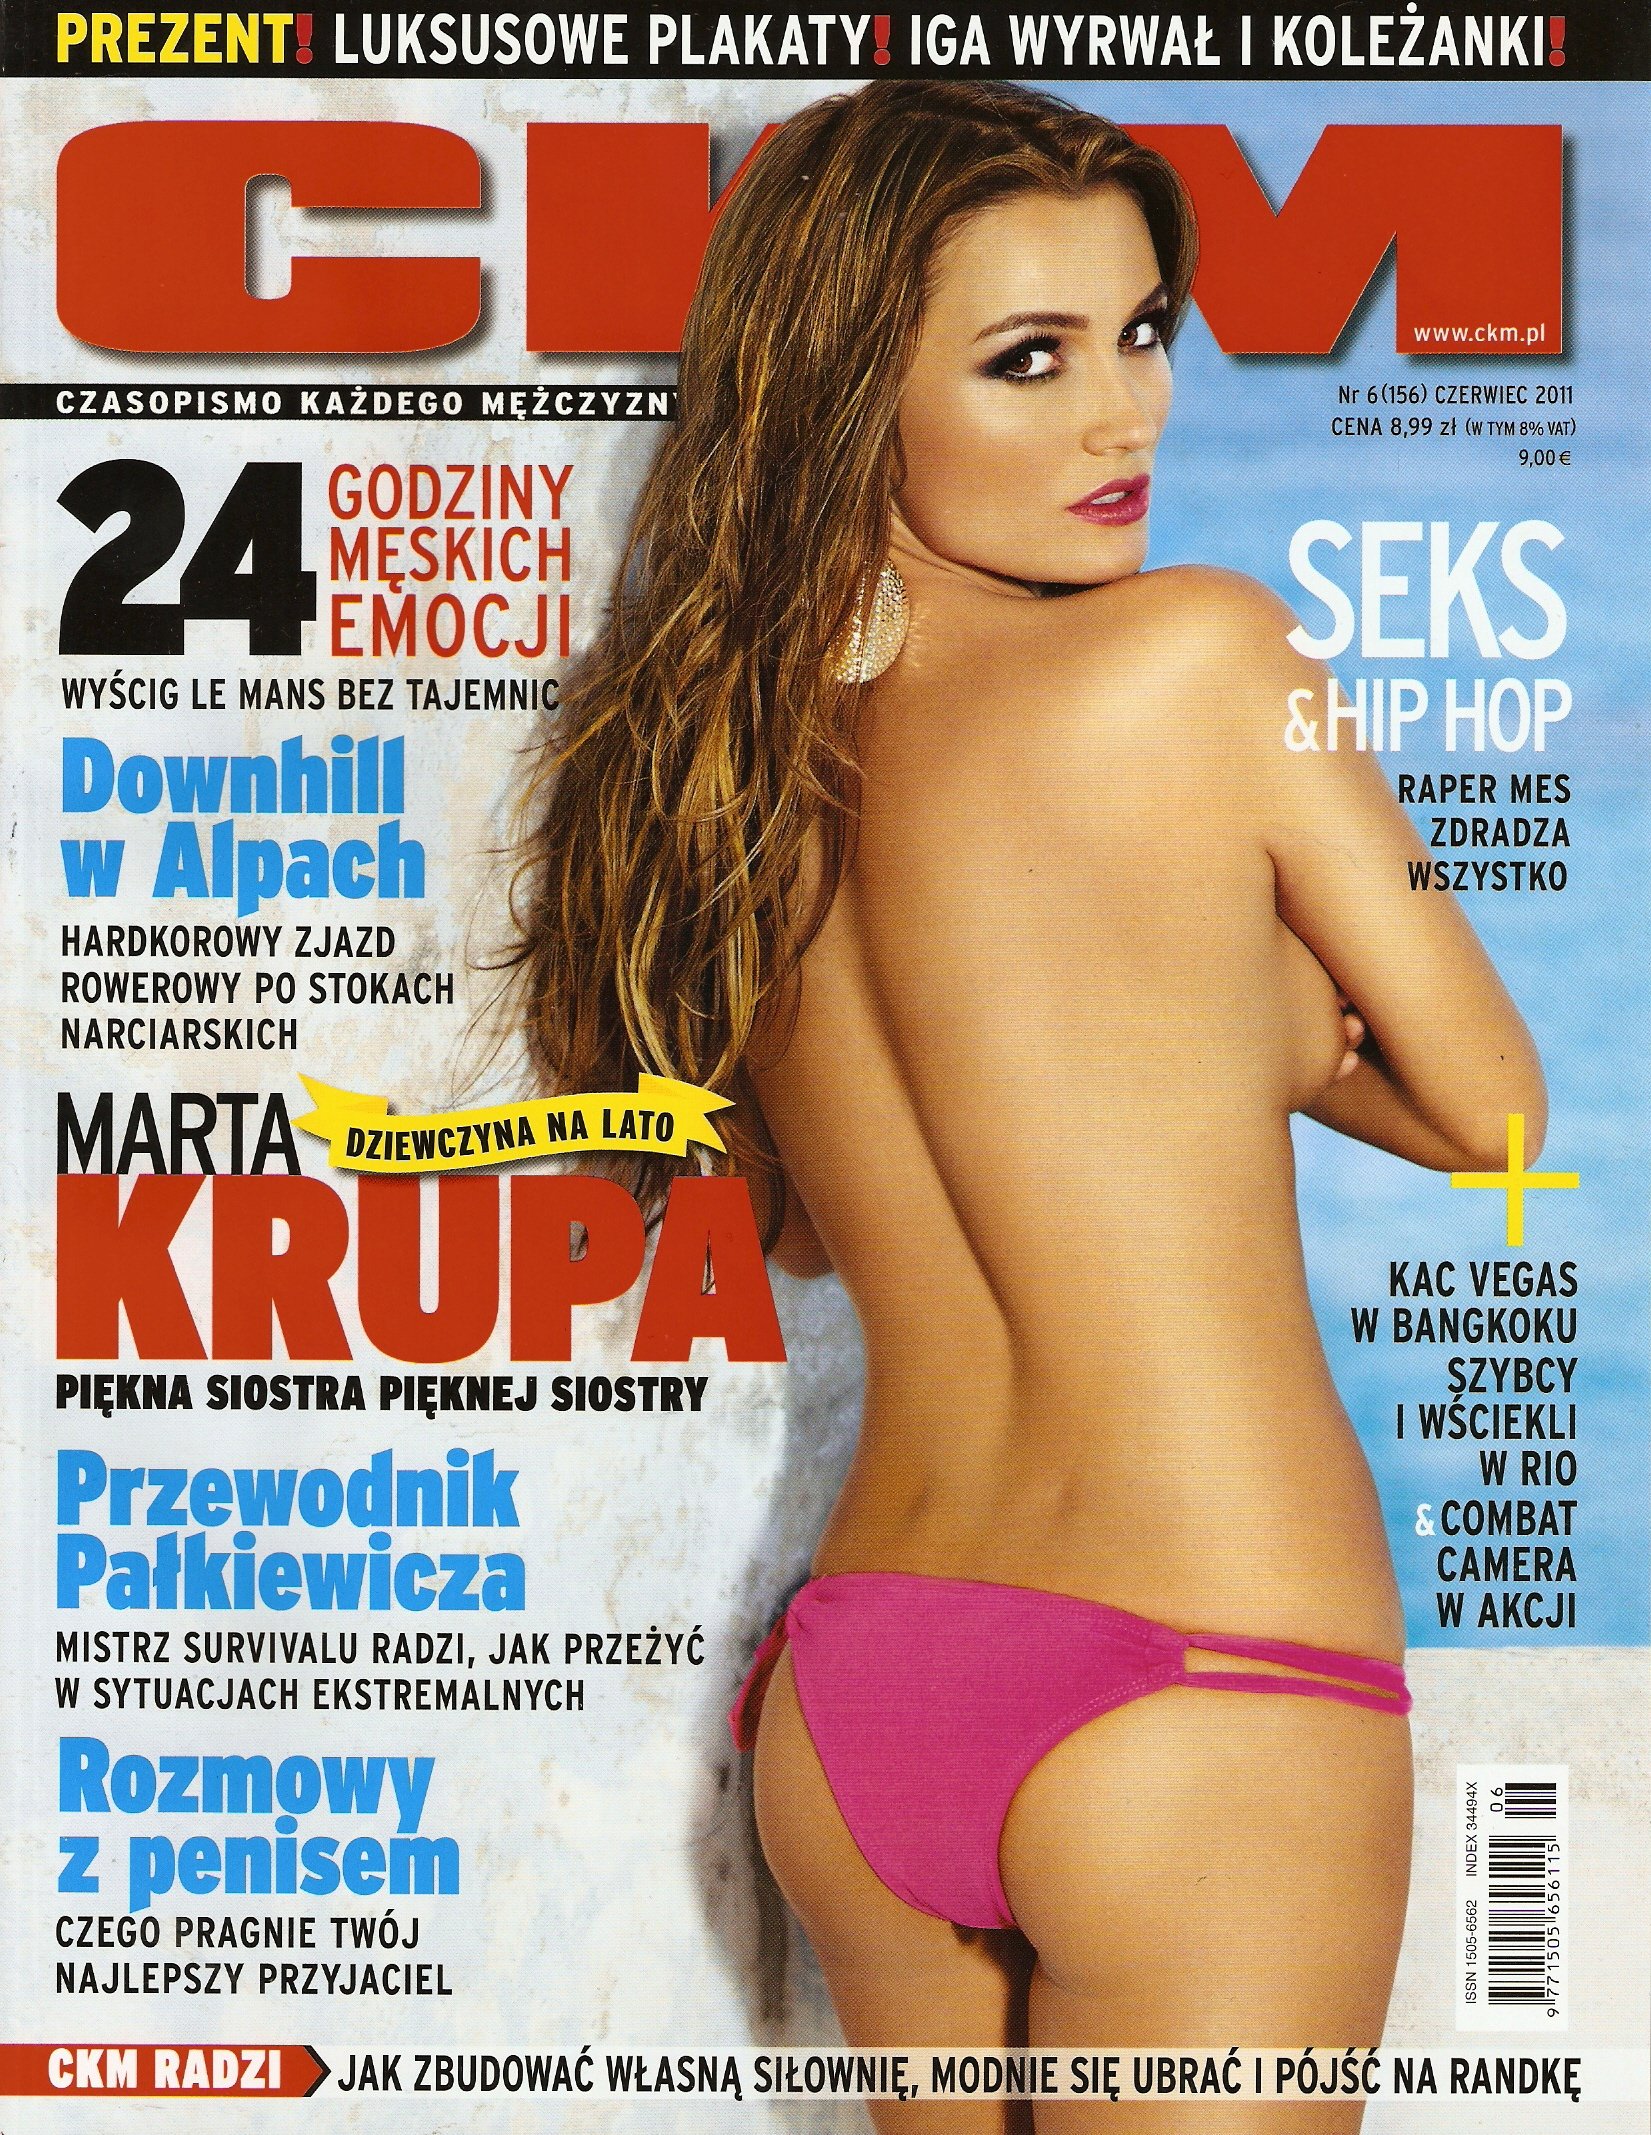 Marta Krupa in CKM Magazine